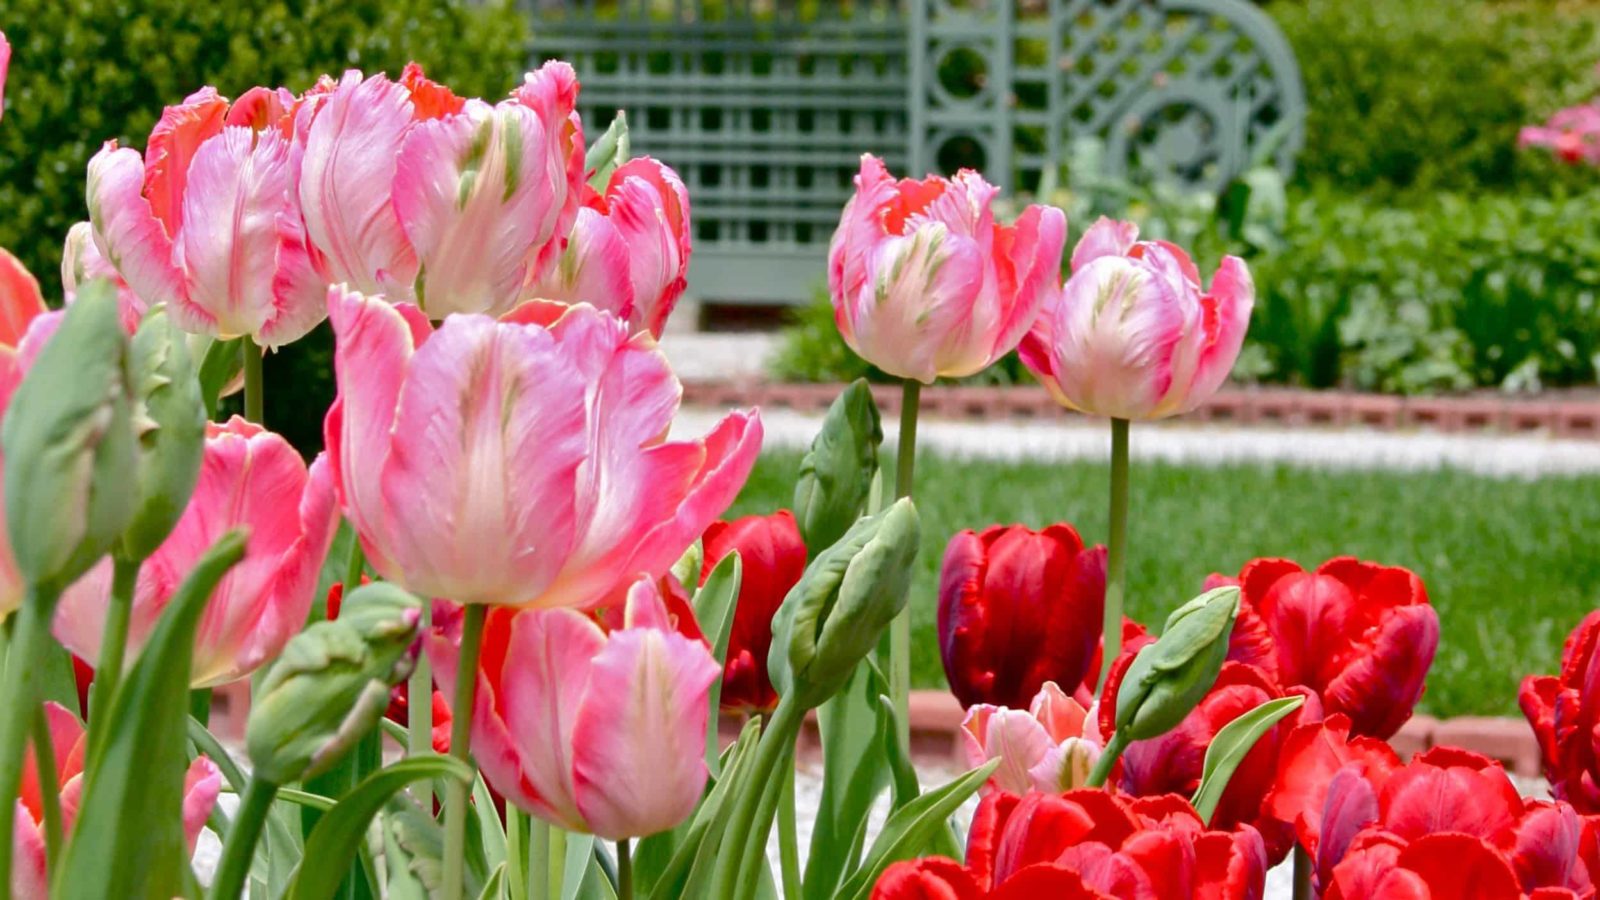 Tulips bloom vividly in Edith Wharton's gardens. Press photo courtesy of The Mount.